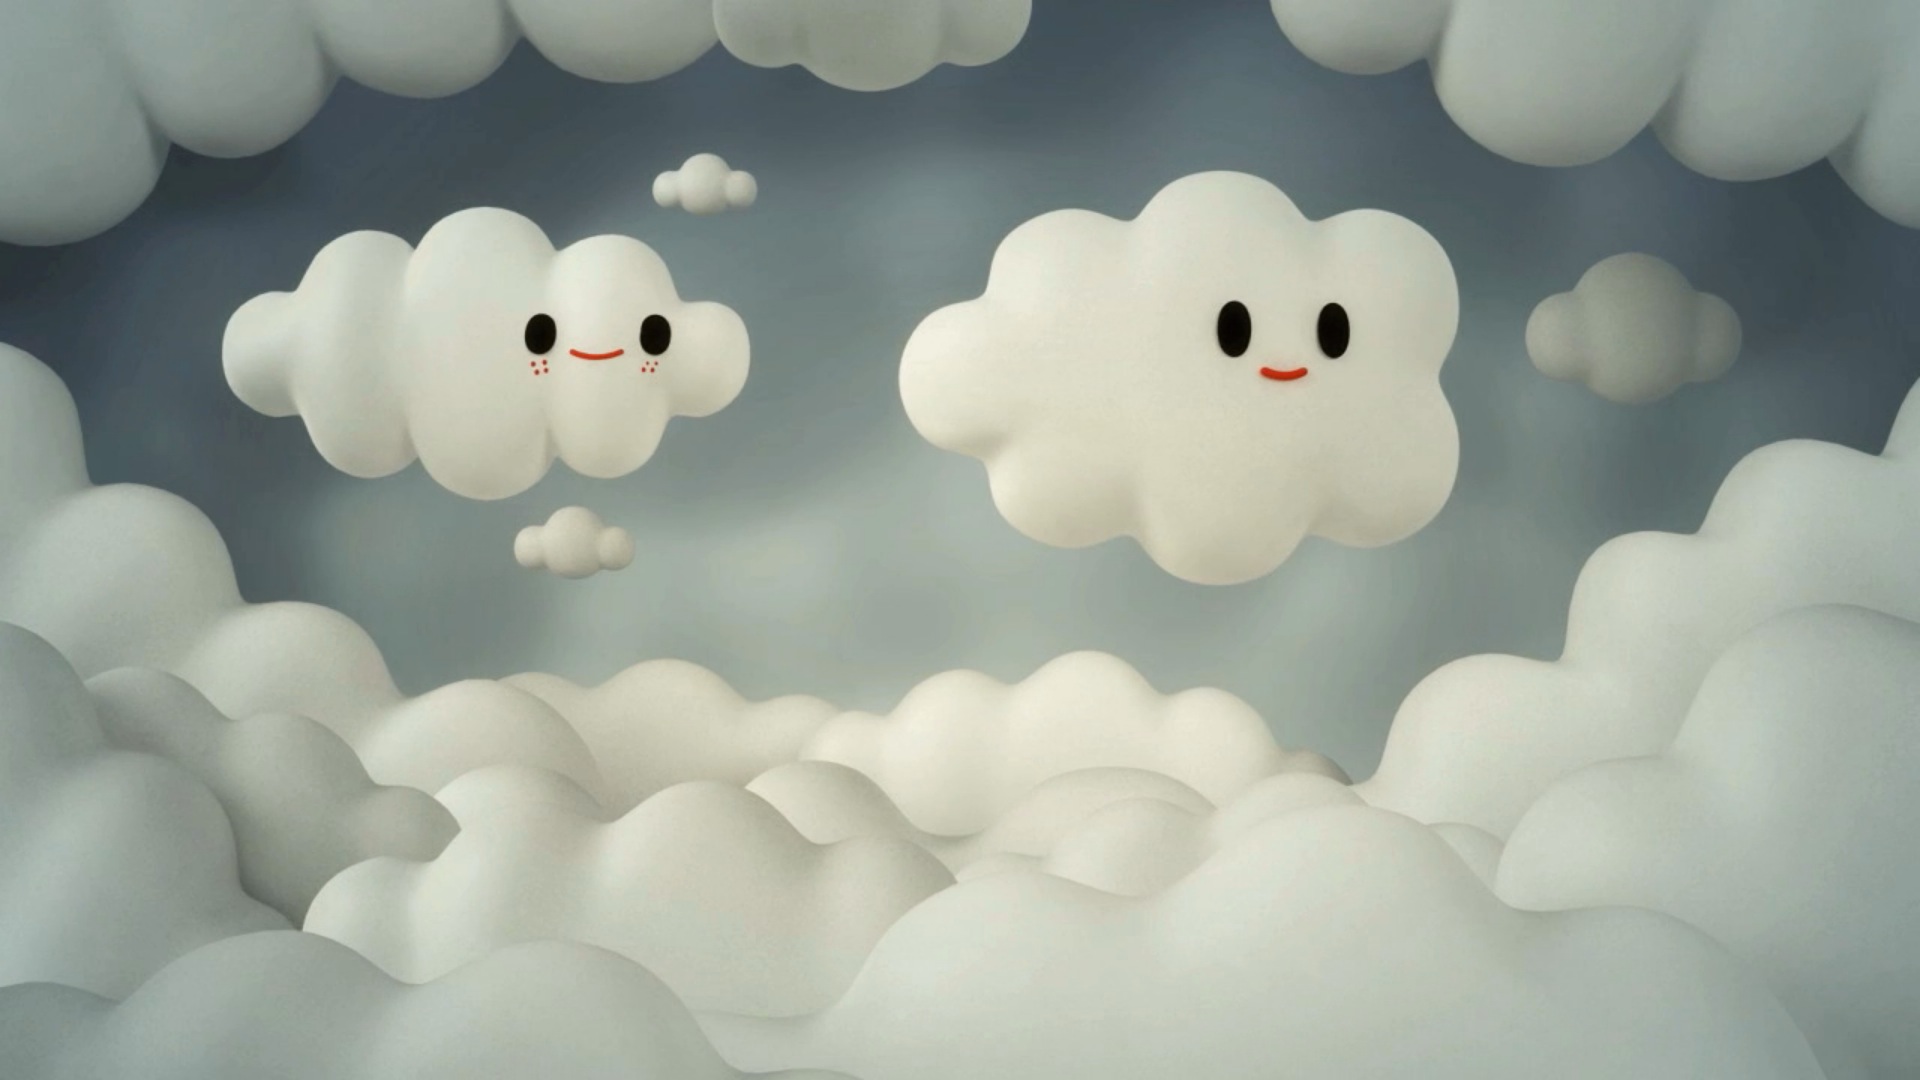 Cloudy Film5 - copie